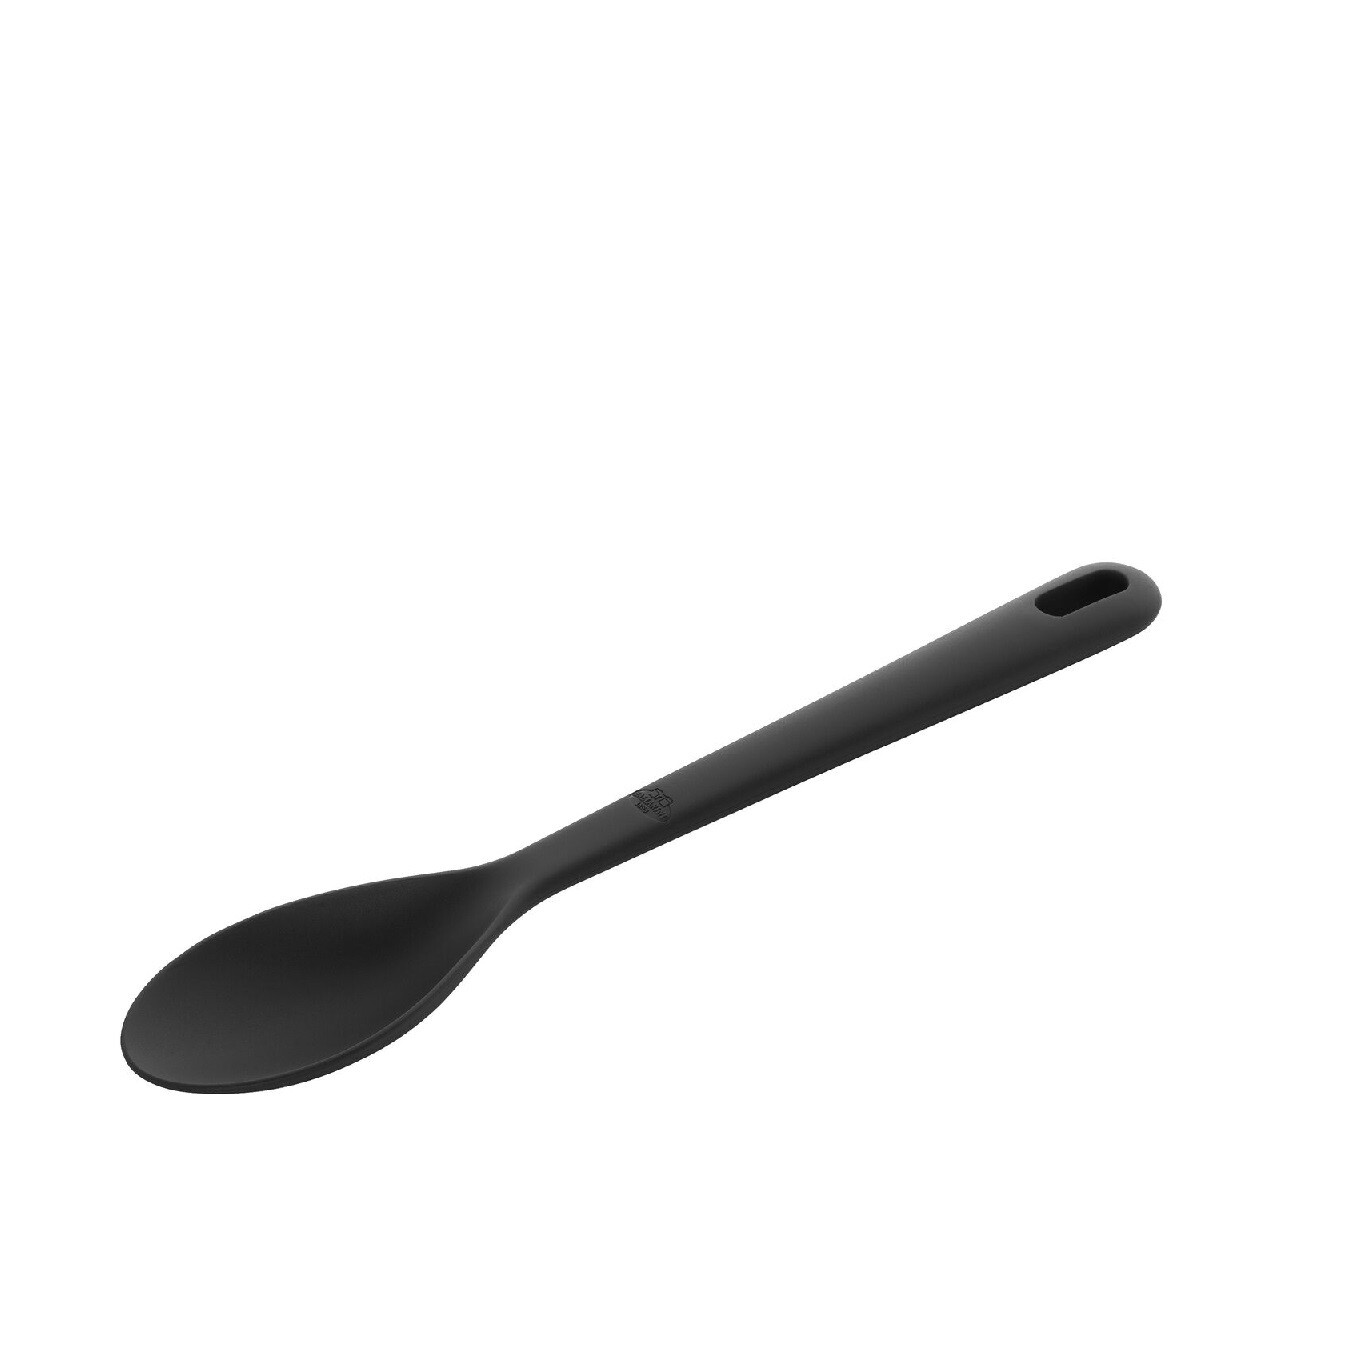 BALLARINI 'nero' serveerlepel 28cm silicone zwart  PROMO 11,95 -3,00